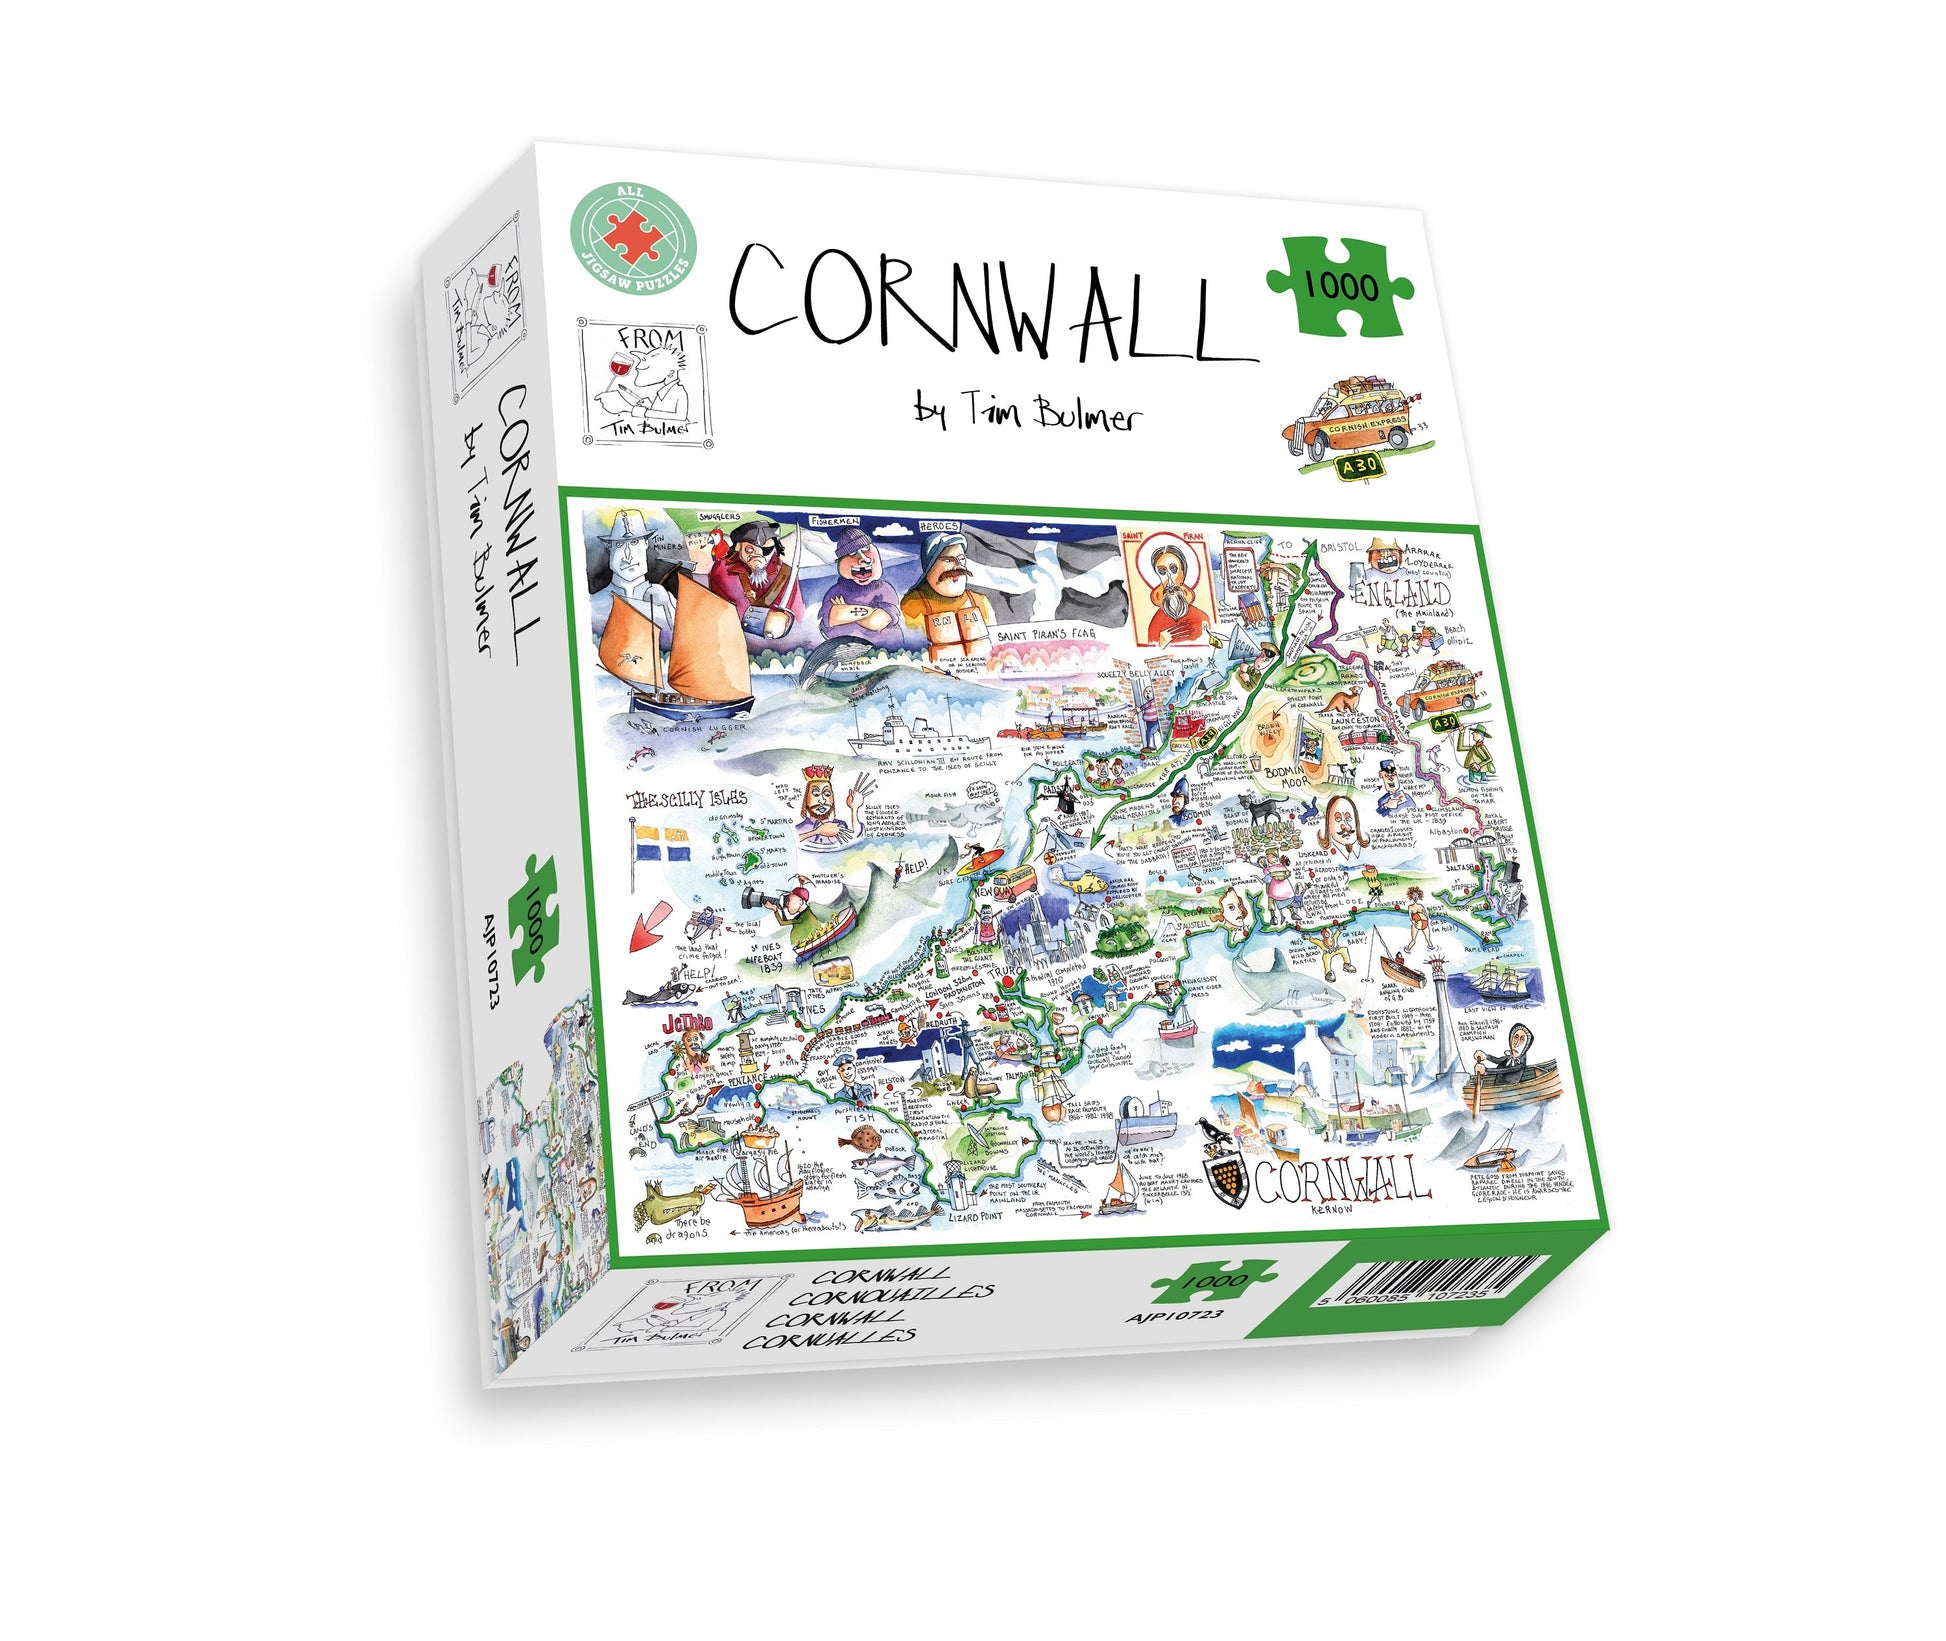 Cornwall - Tim Bulmer 1000 piece Jigsaw box